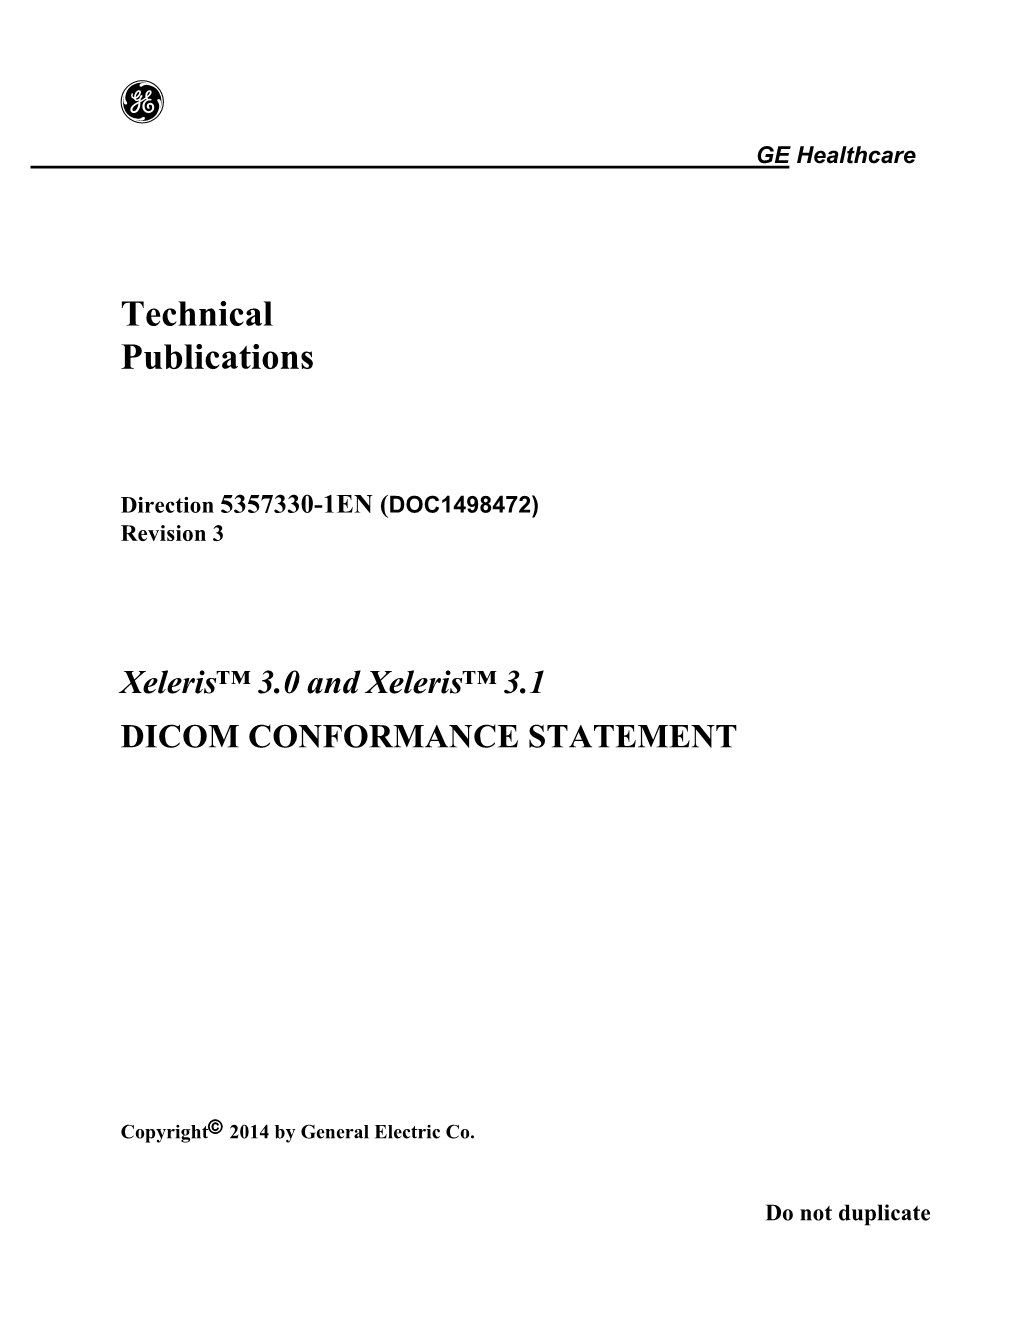 DICOM Conformance Statement Xeleris 3.0 3.1